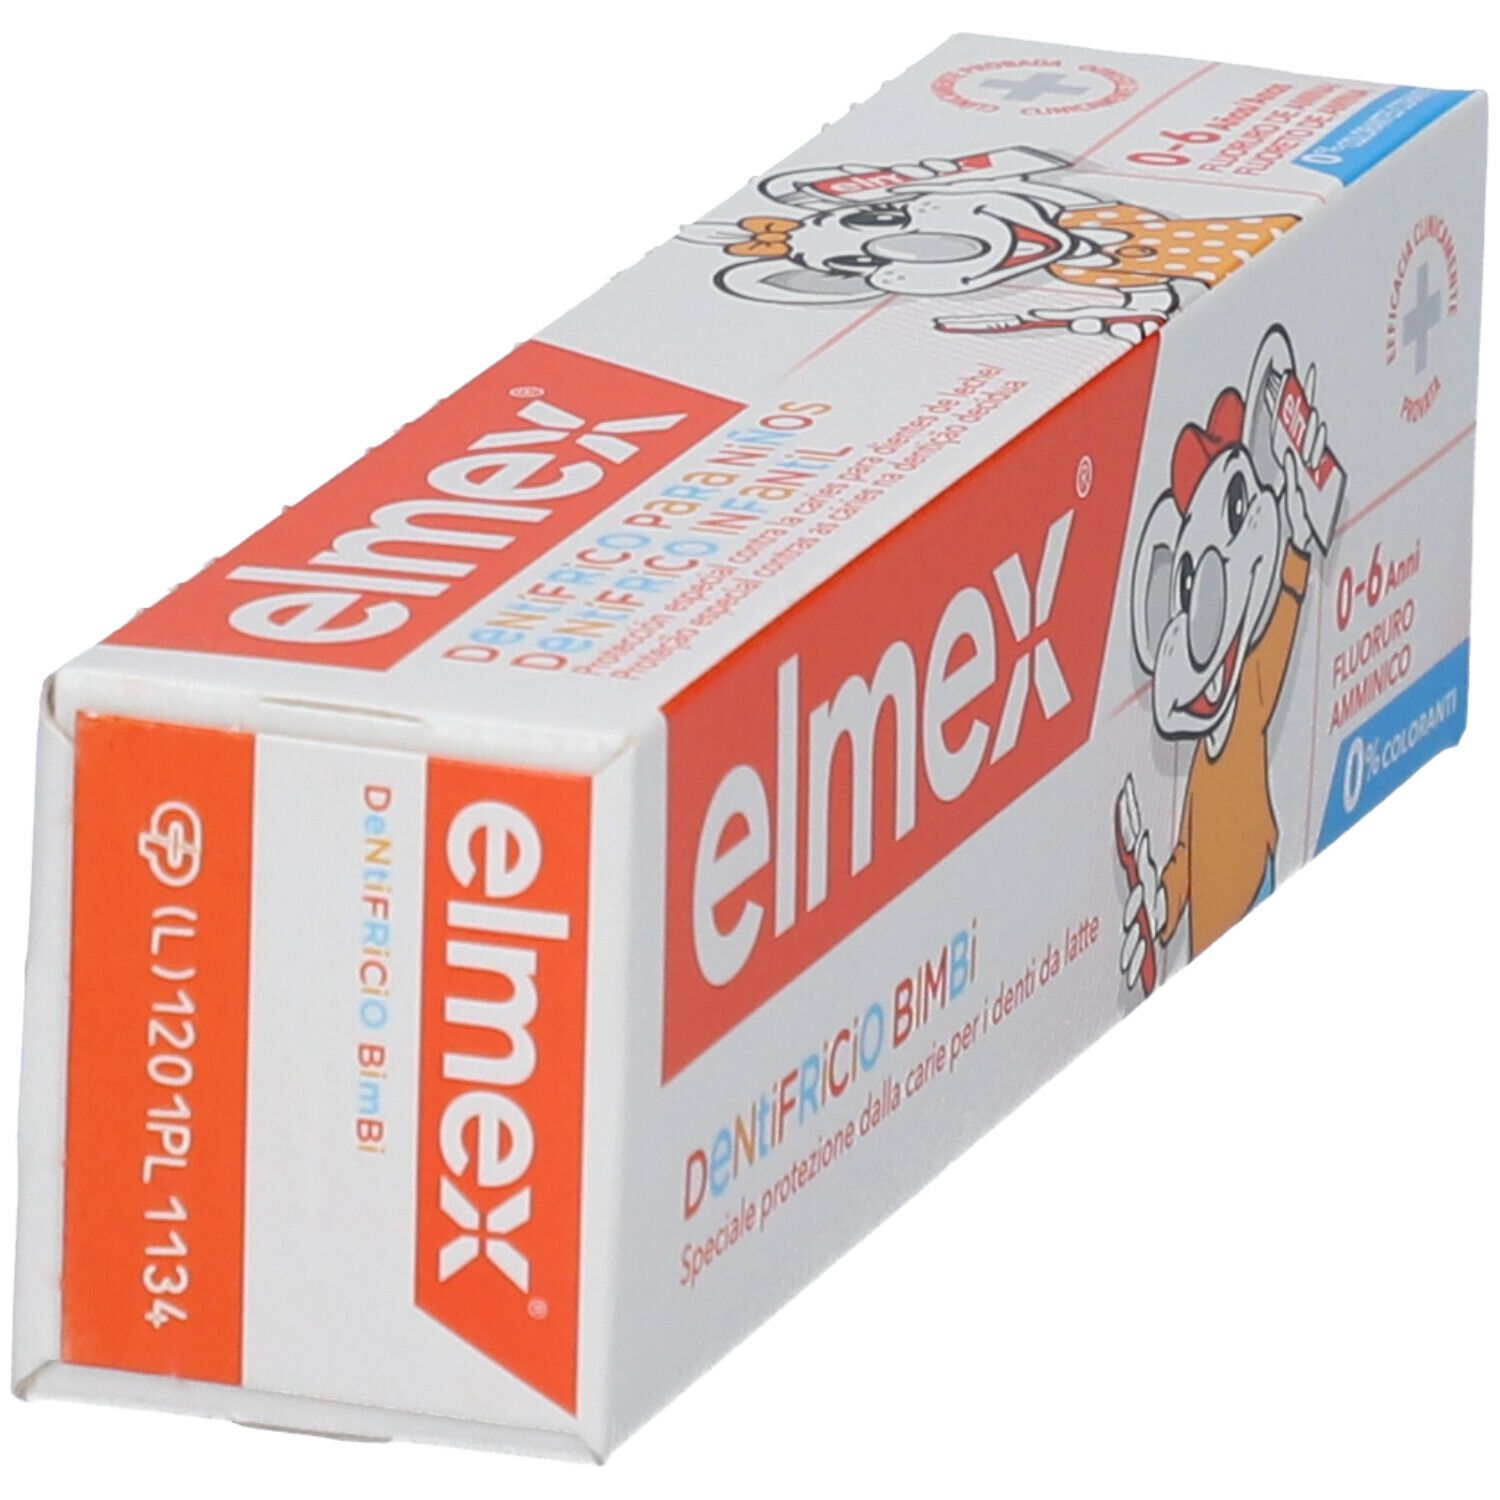 elmex® Dentifricio Bimbi